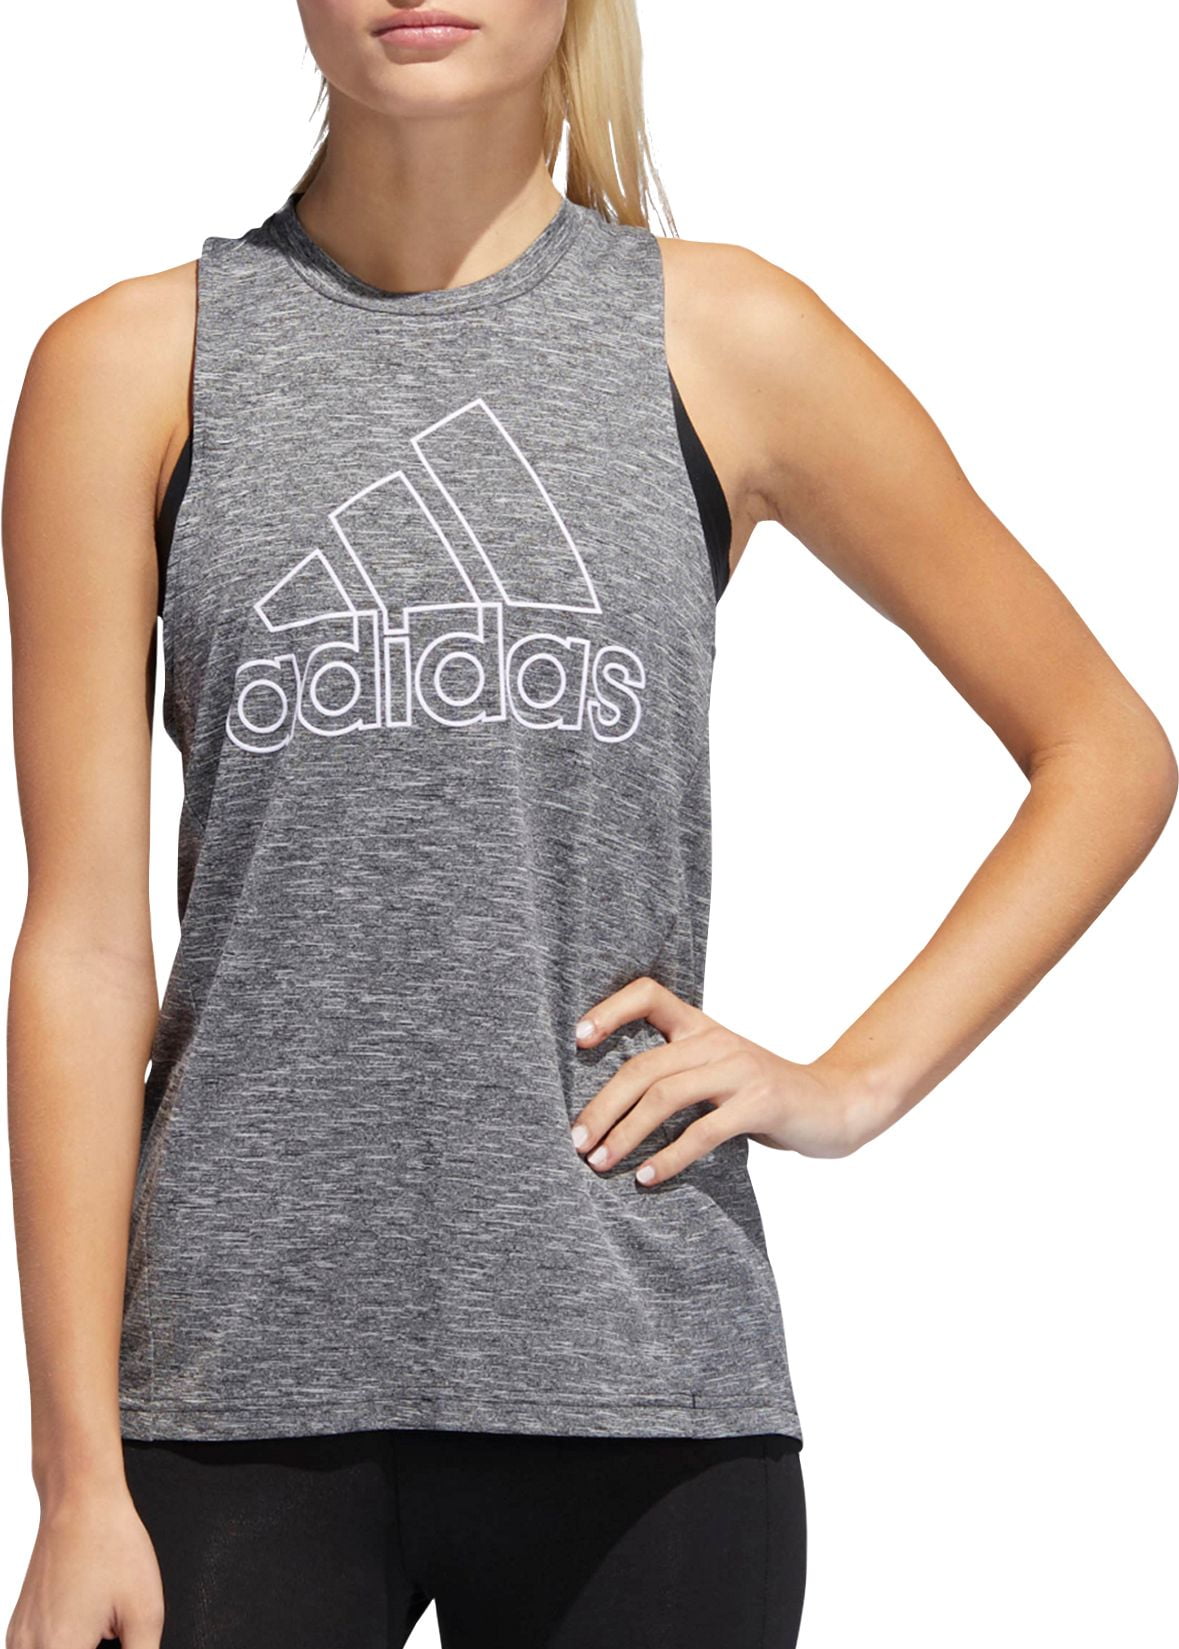 Adidas - adidas Women's Sport 2 Street Prize Tank Top - Walmart.com ...